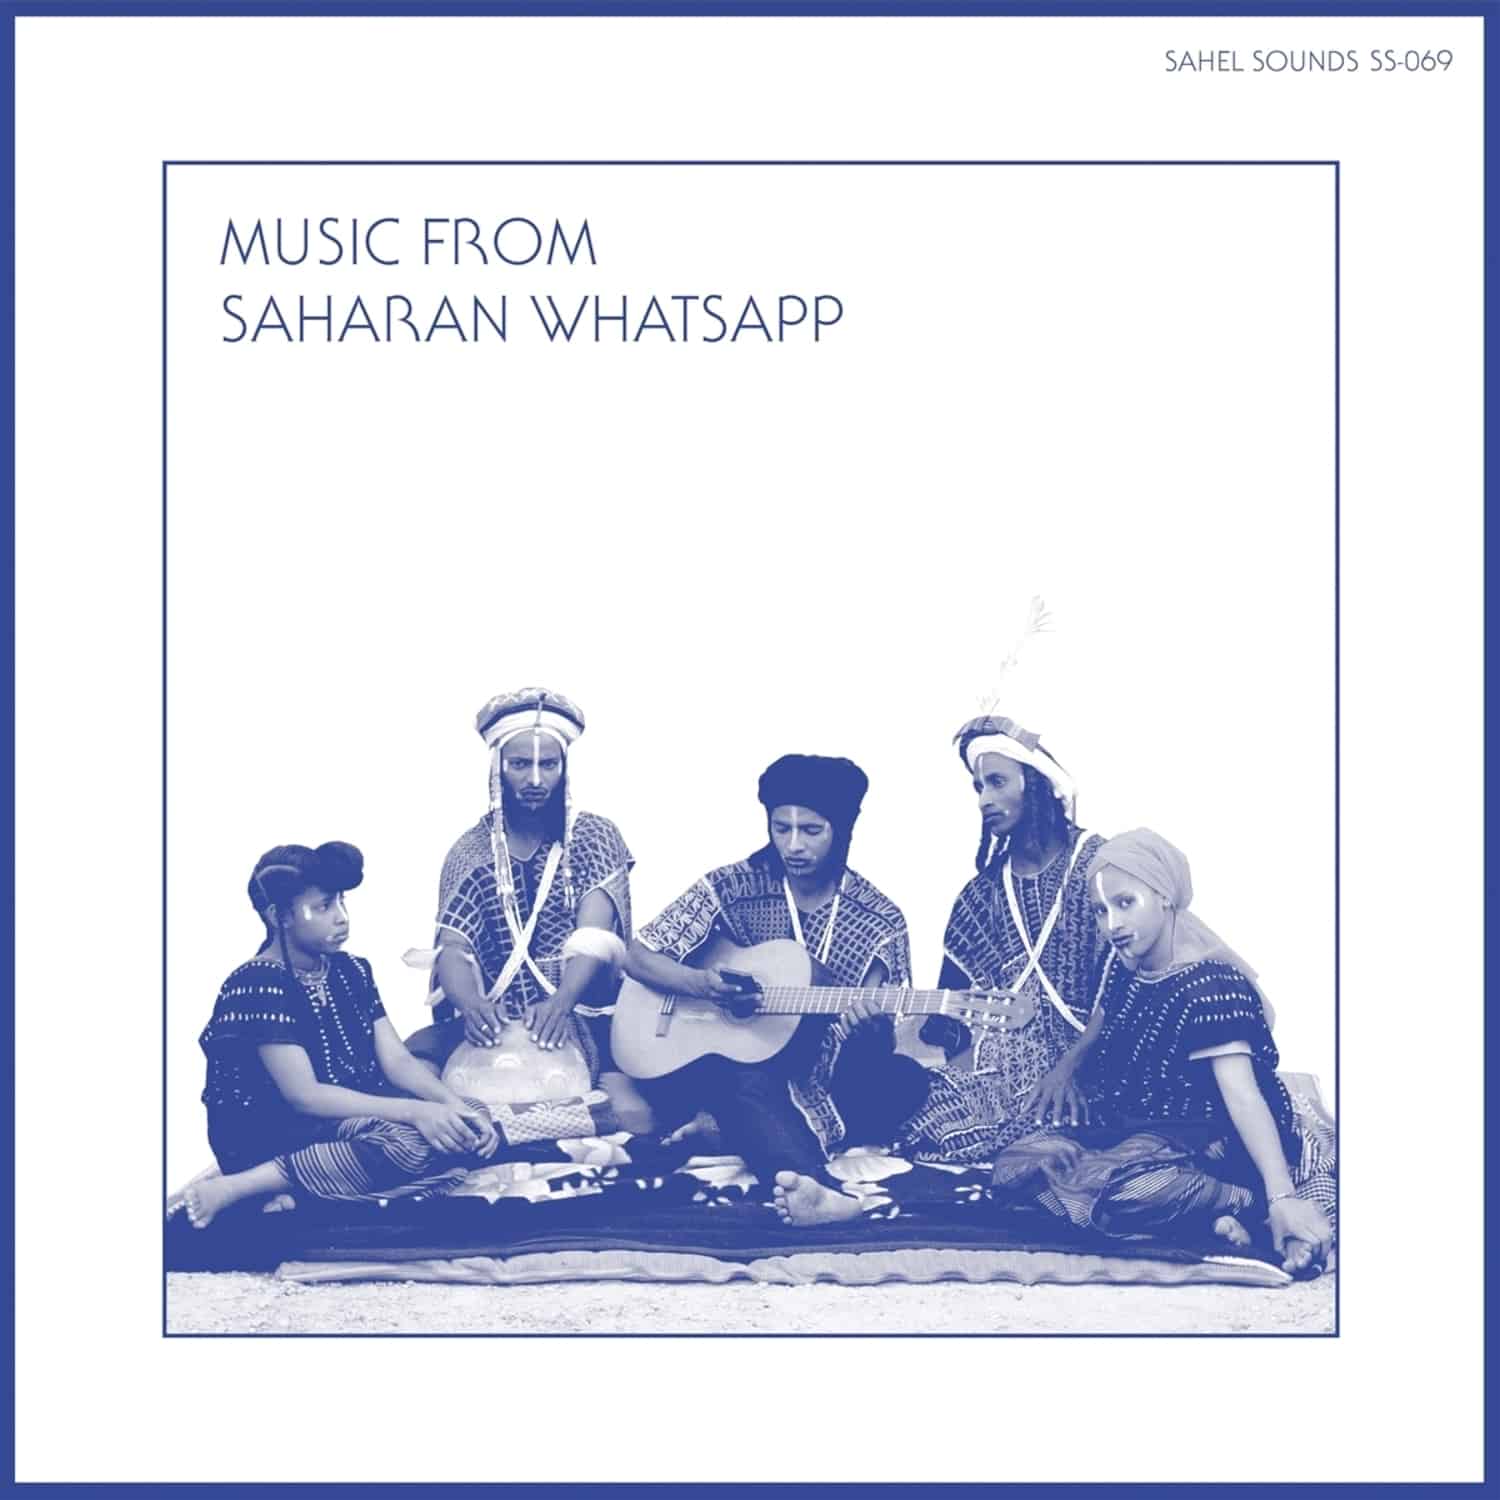 Sahel Sounds & Various Artists - MUSIC FROM SAHARAN WHATSAPP 